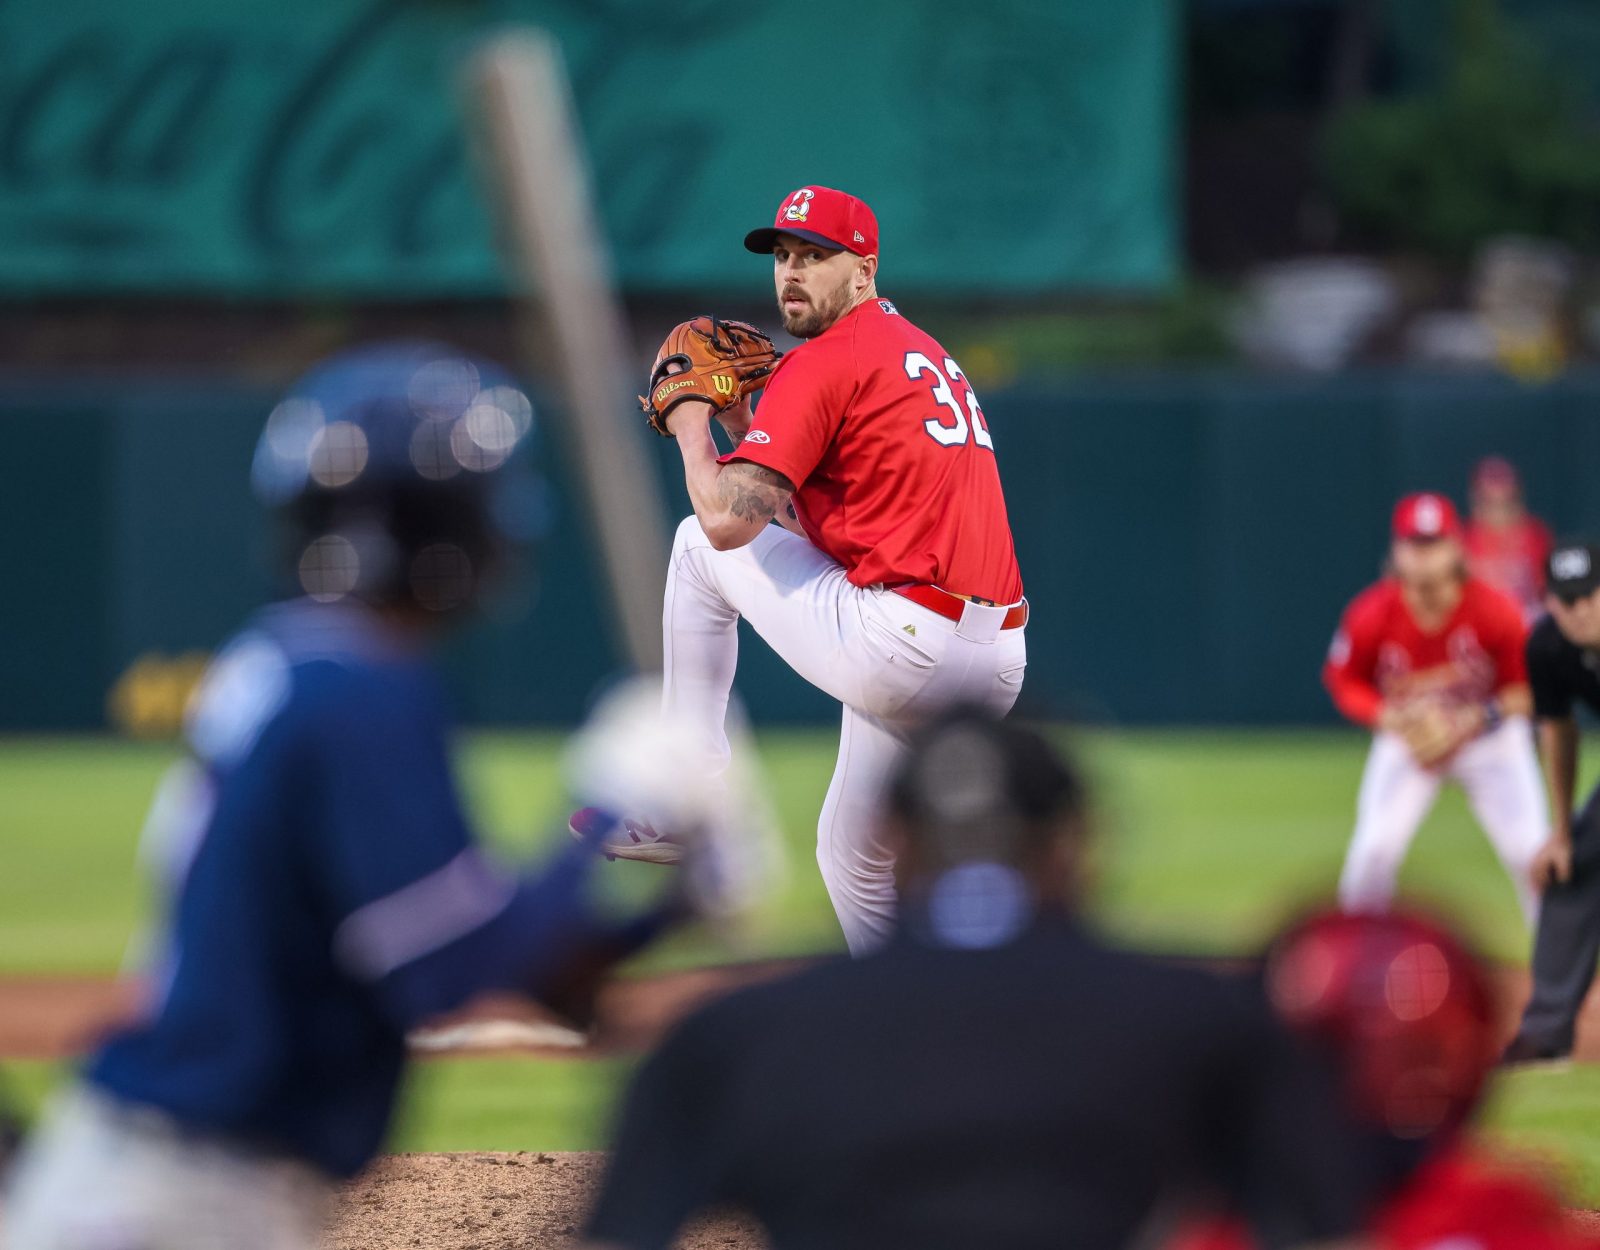 Logan Sawyer, wearing a Springfield Cardinals uniform, pitches the baseball